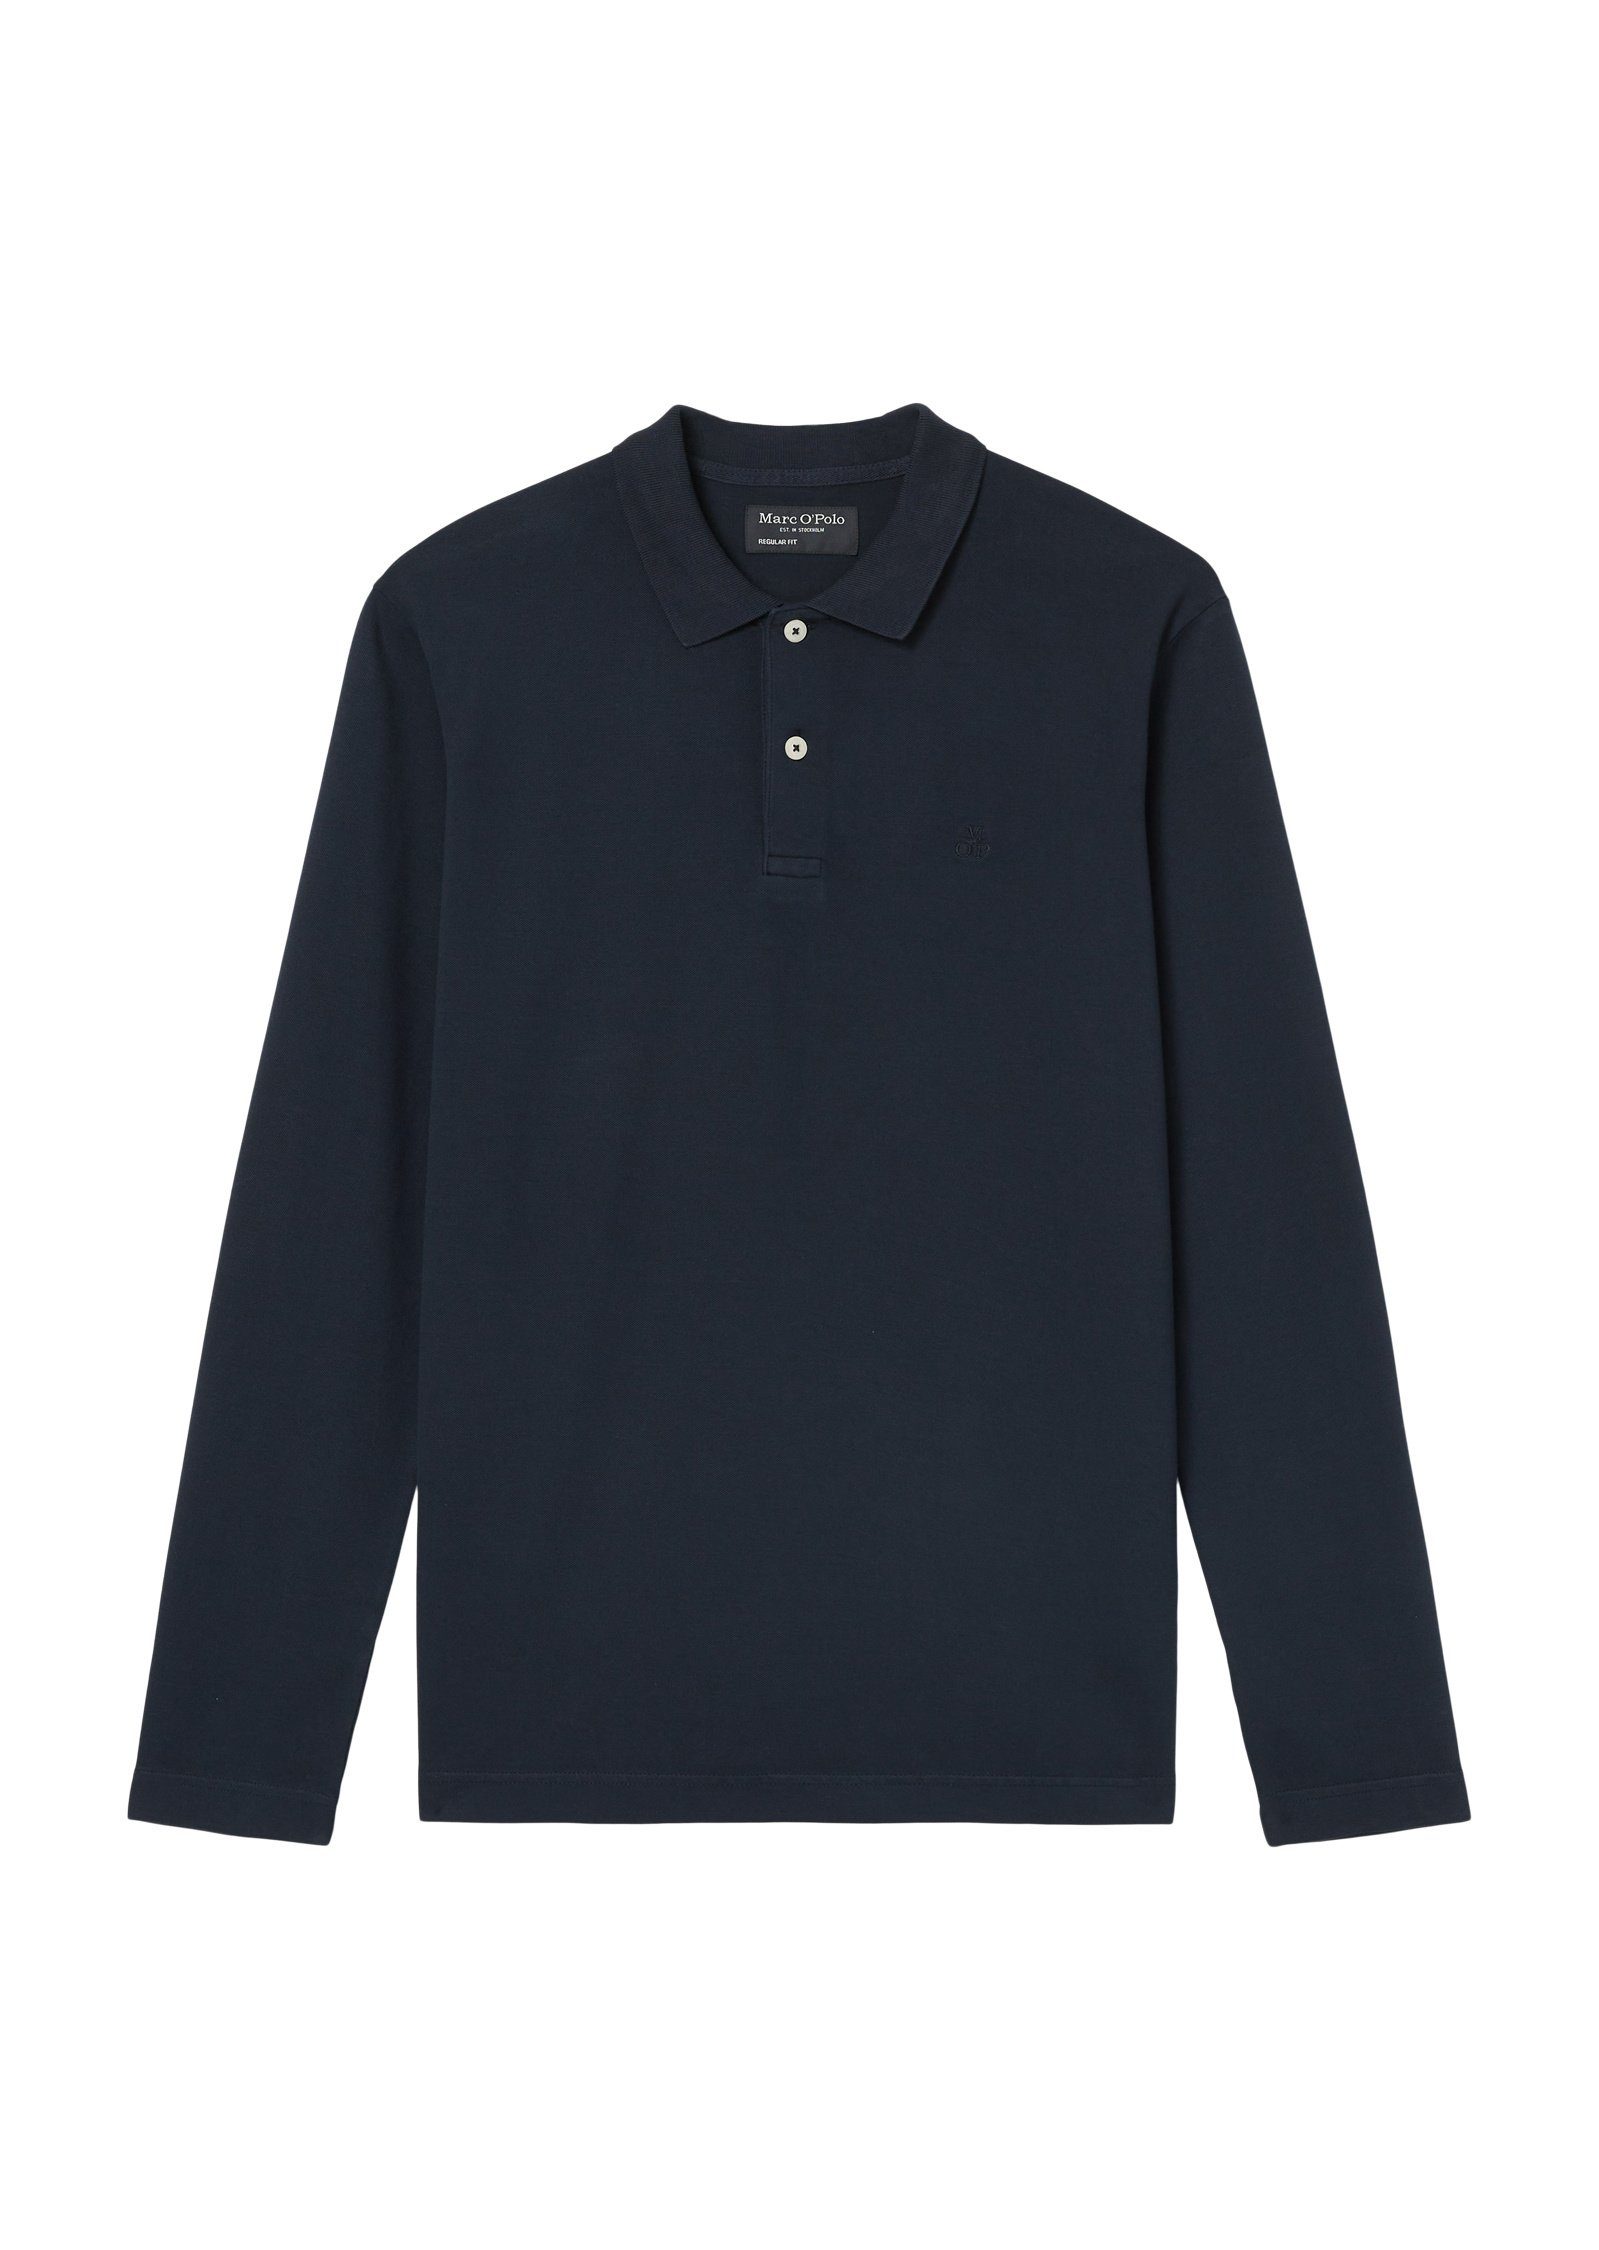 Elasthan O'Polo Bio-Baumwolle Langarm-Poloshirt dunkelblau mit Marc aus